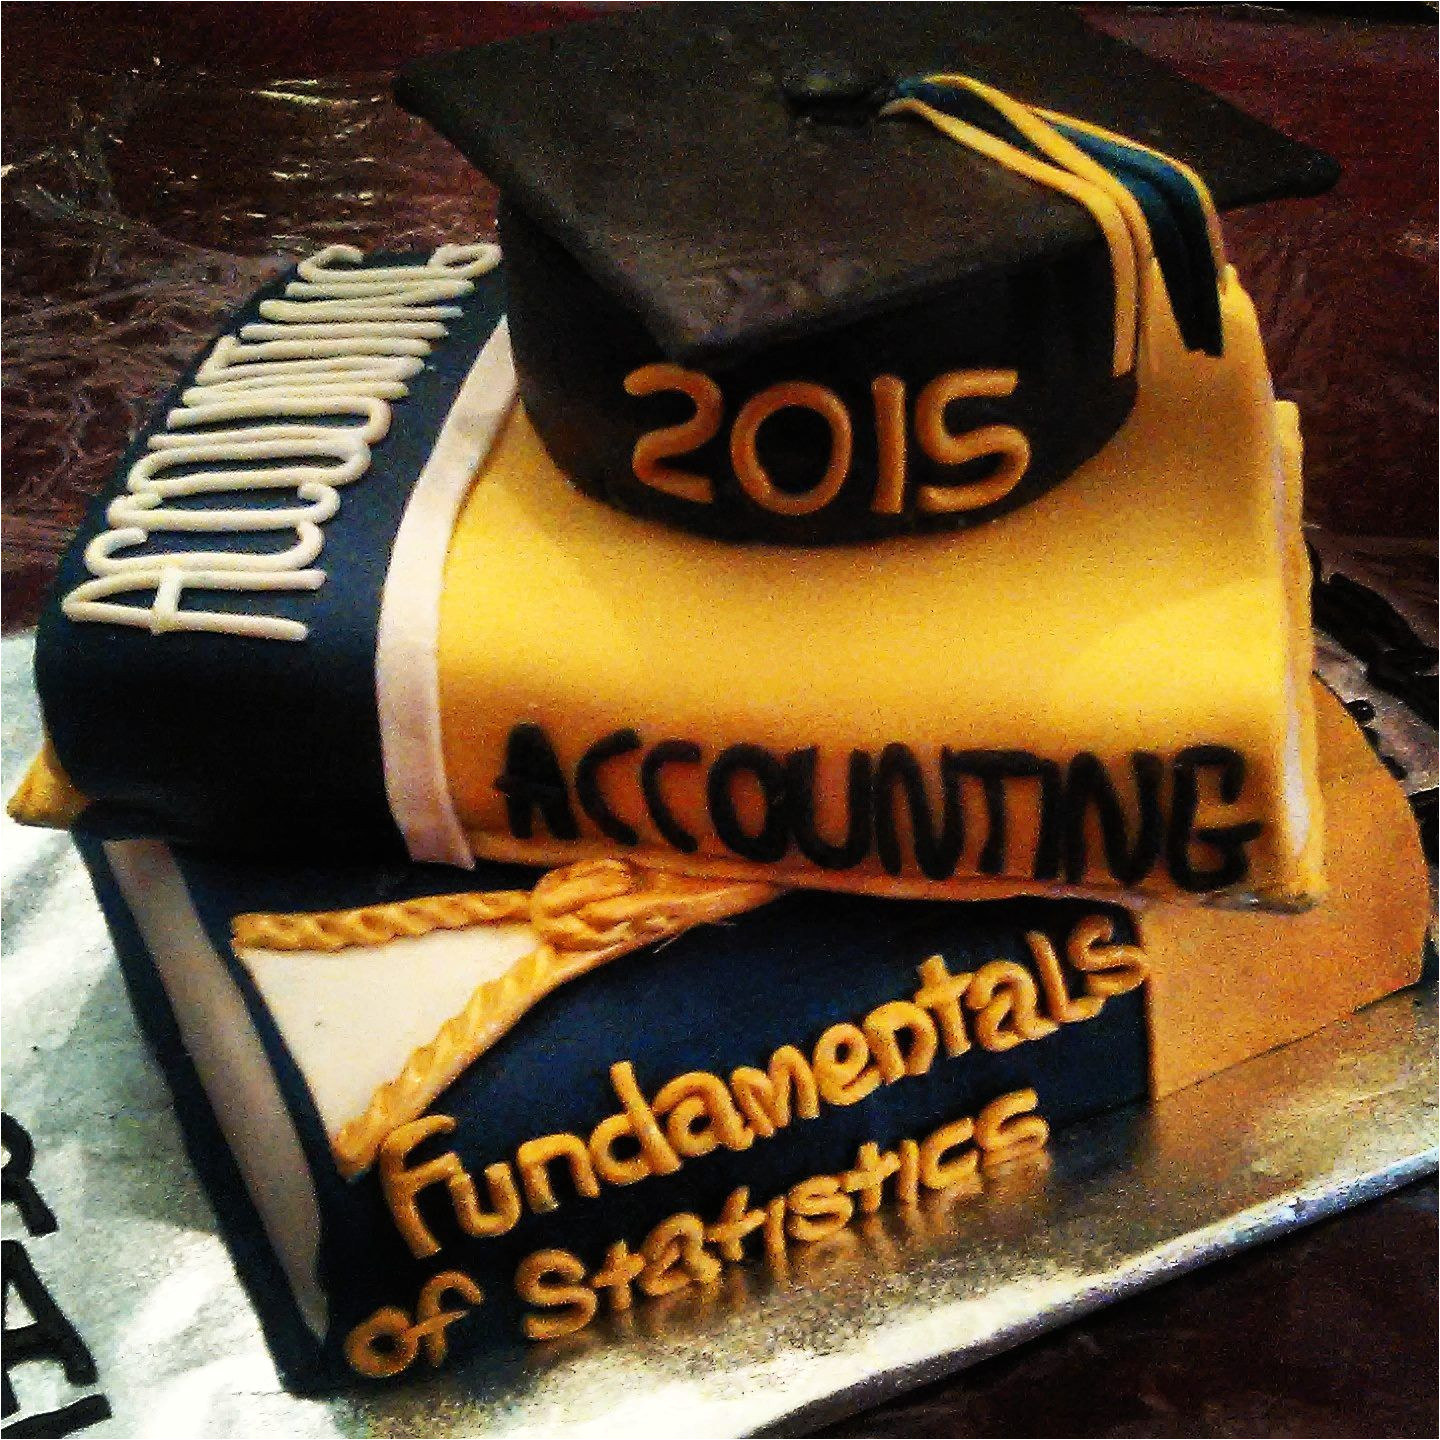 accounting major graduation cake